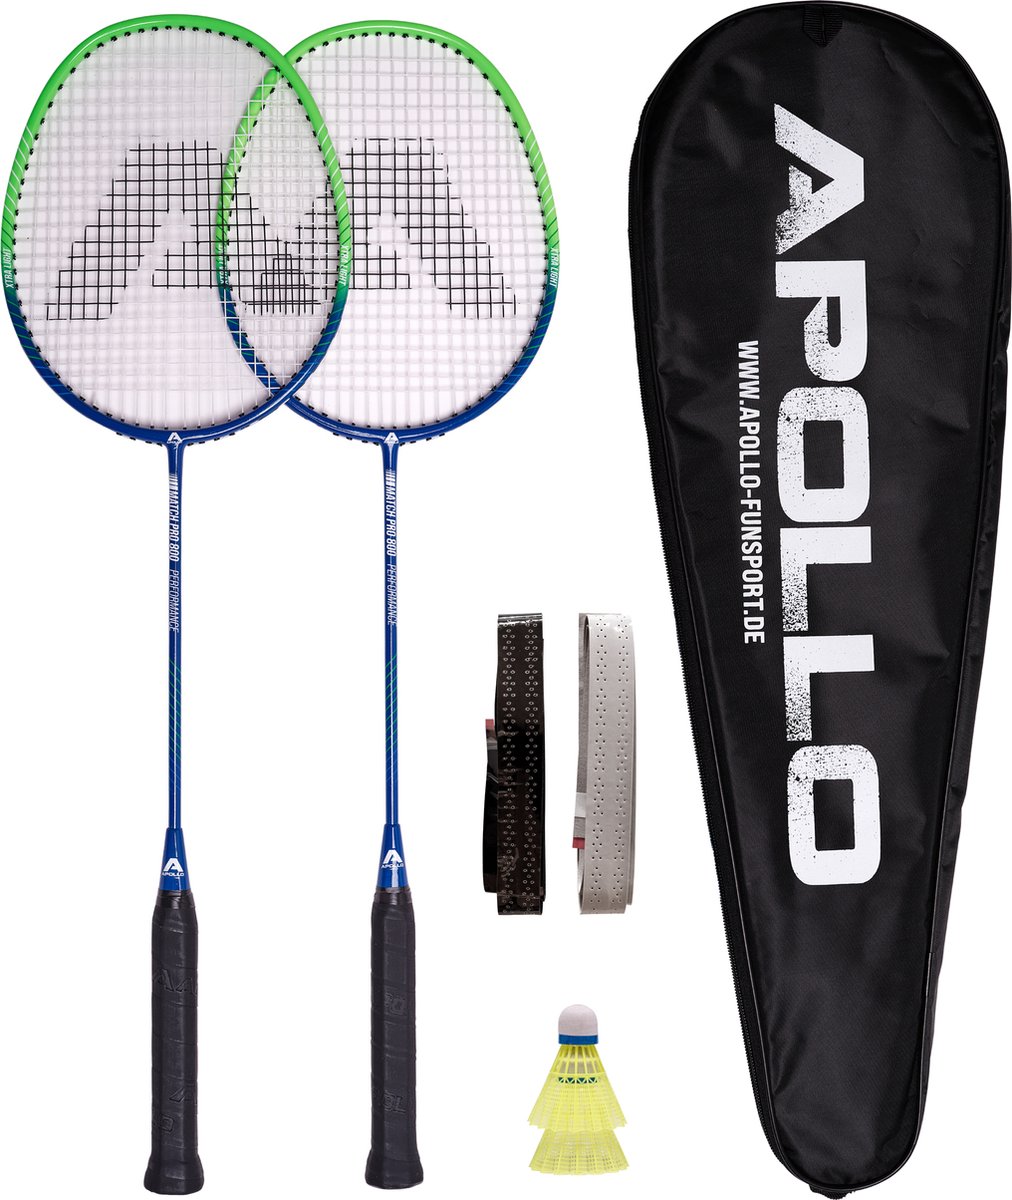 Apollo Badmintonset | Carbon professionele badmintonracket | lichtgewicht badmintonracket | set voor training, sport en entertainment met rackettas | shuttleset kinderen - Apollo